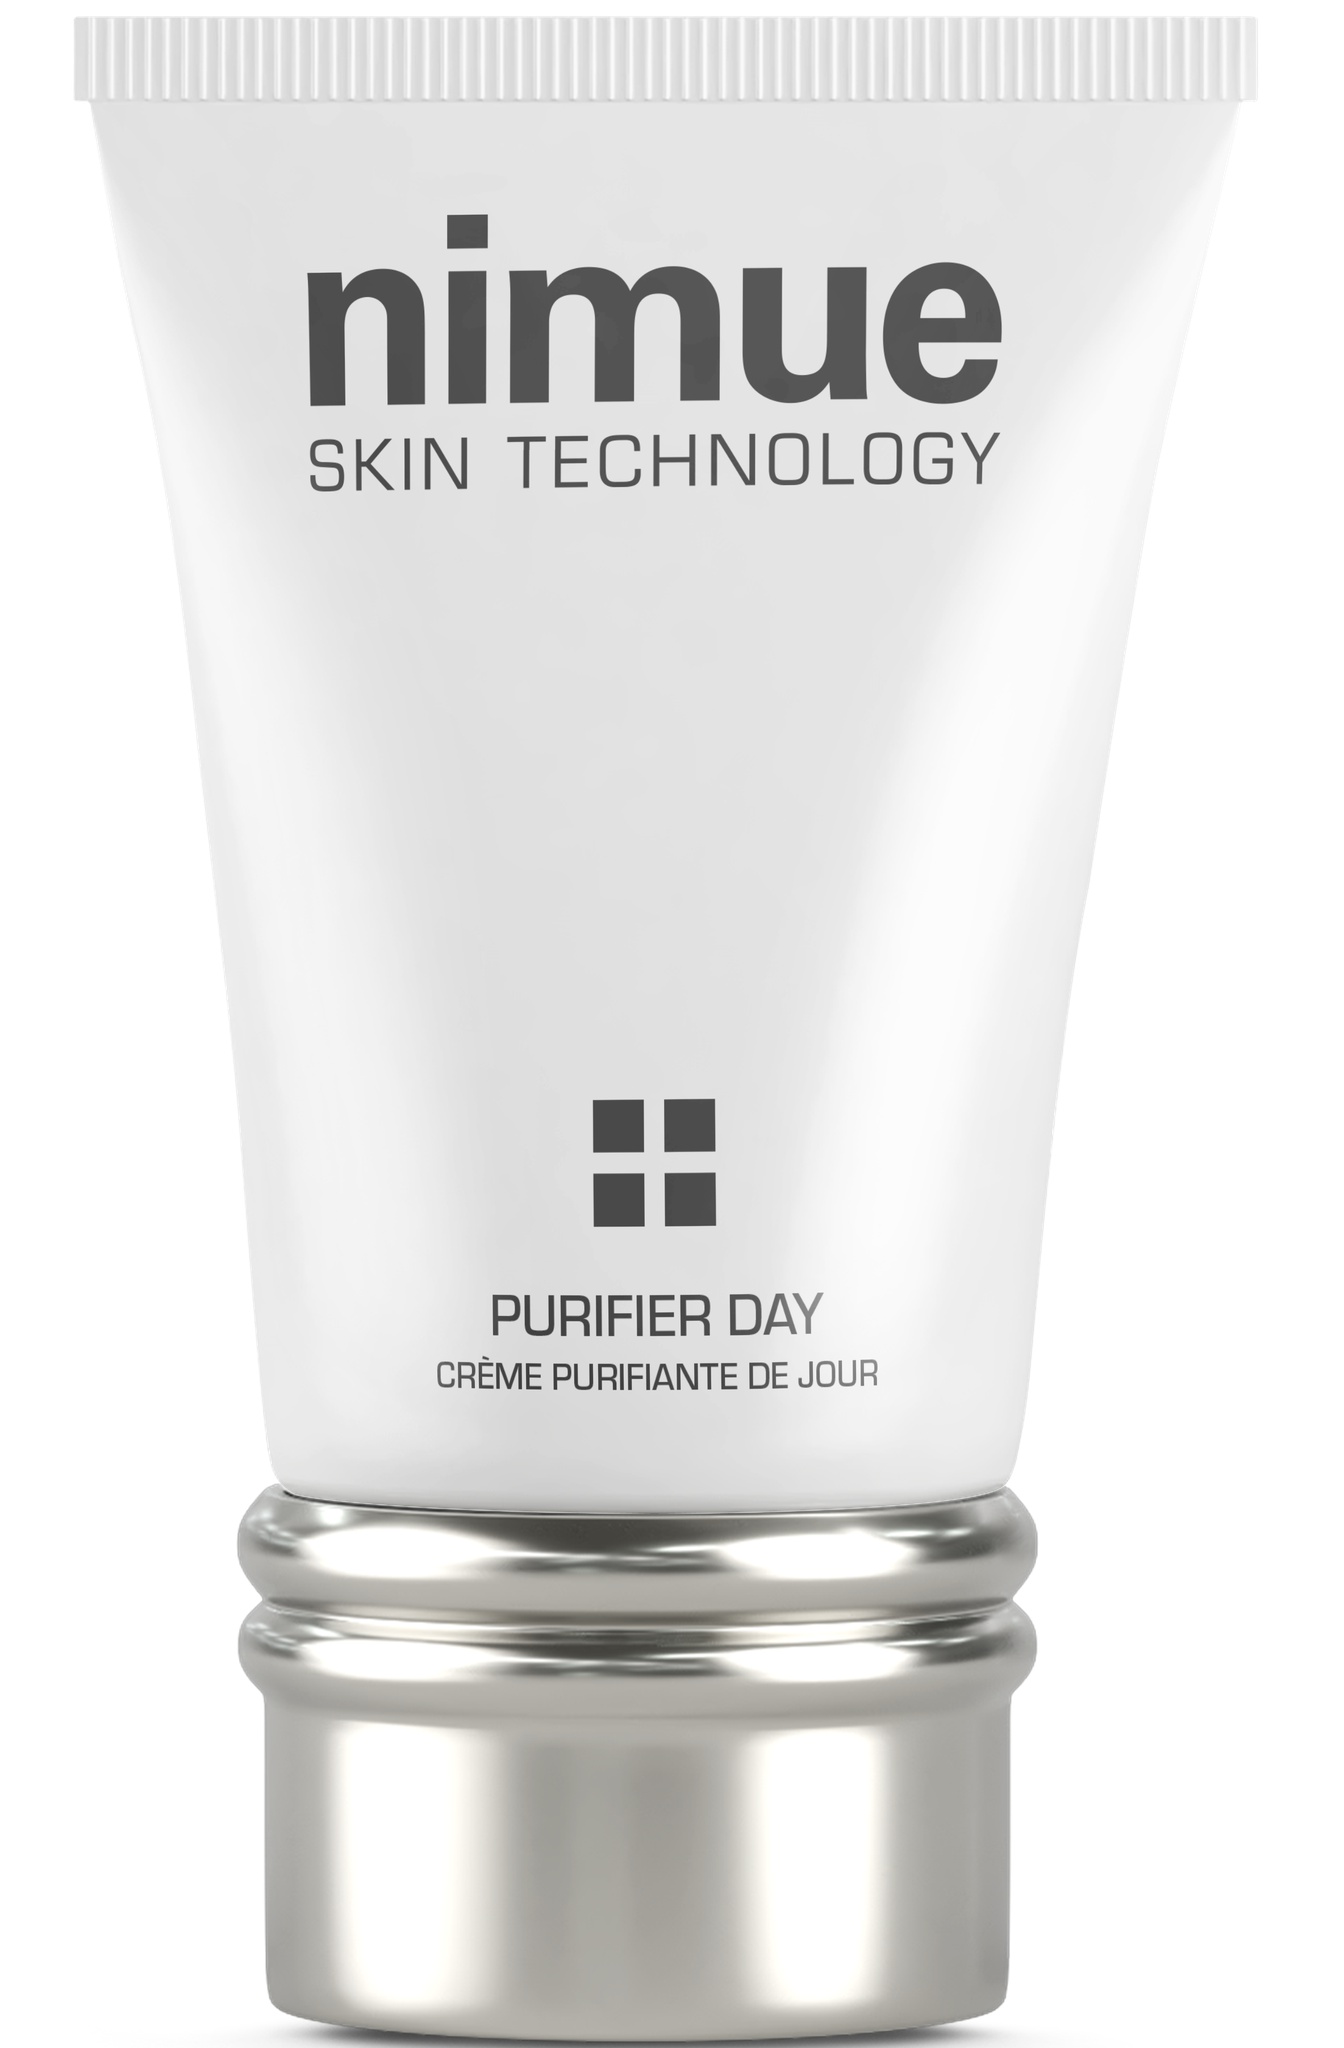 Nimue skin technology Purifier Day